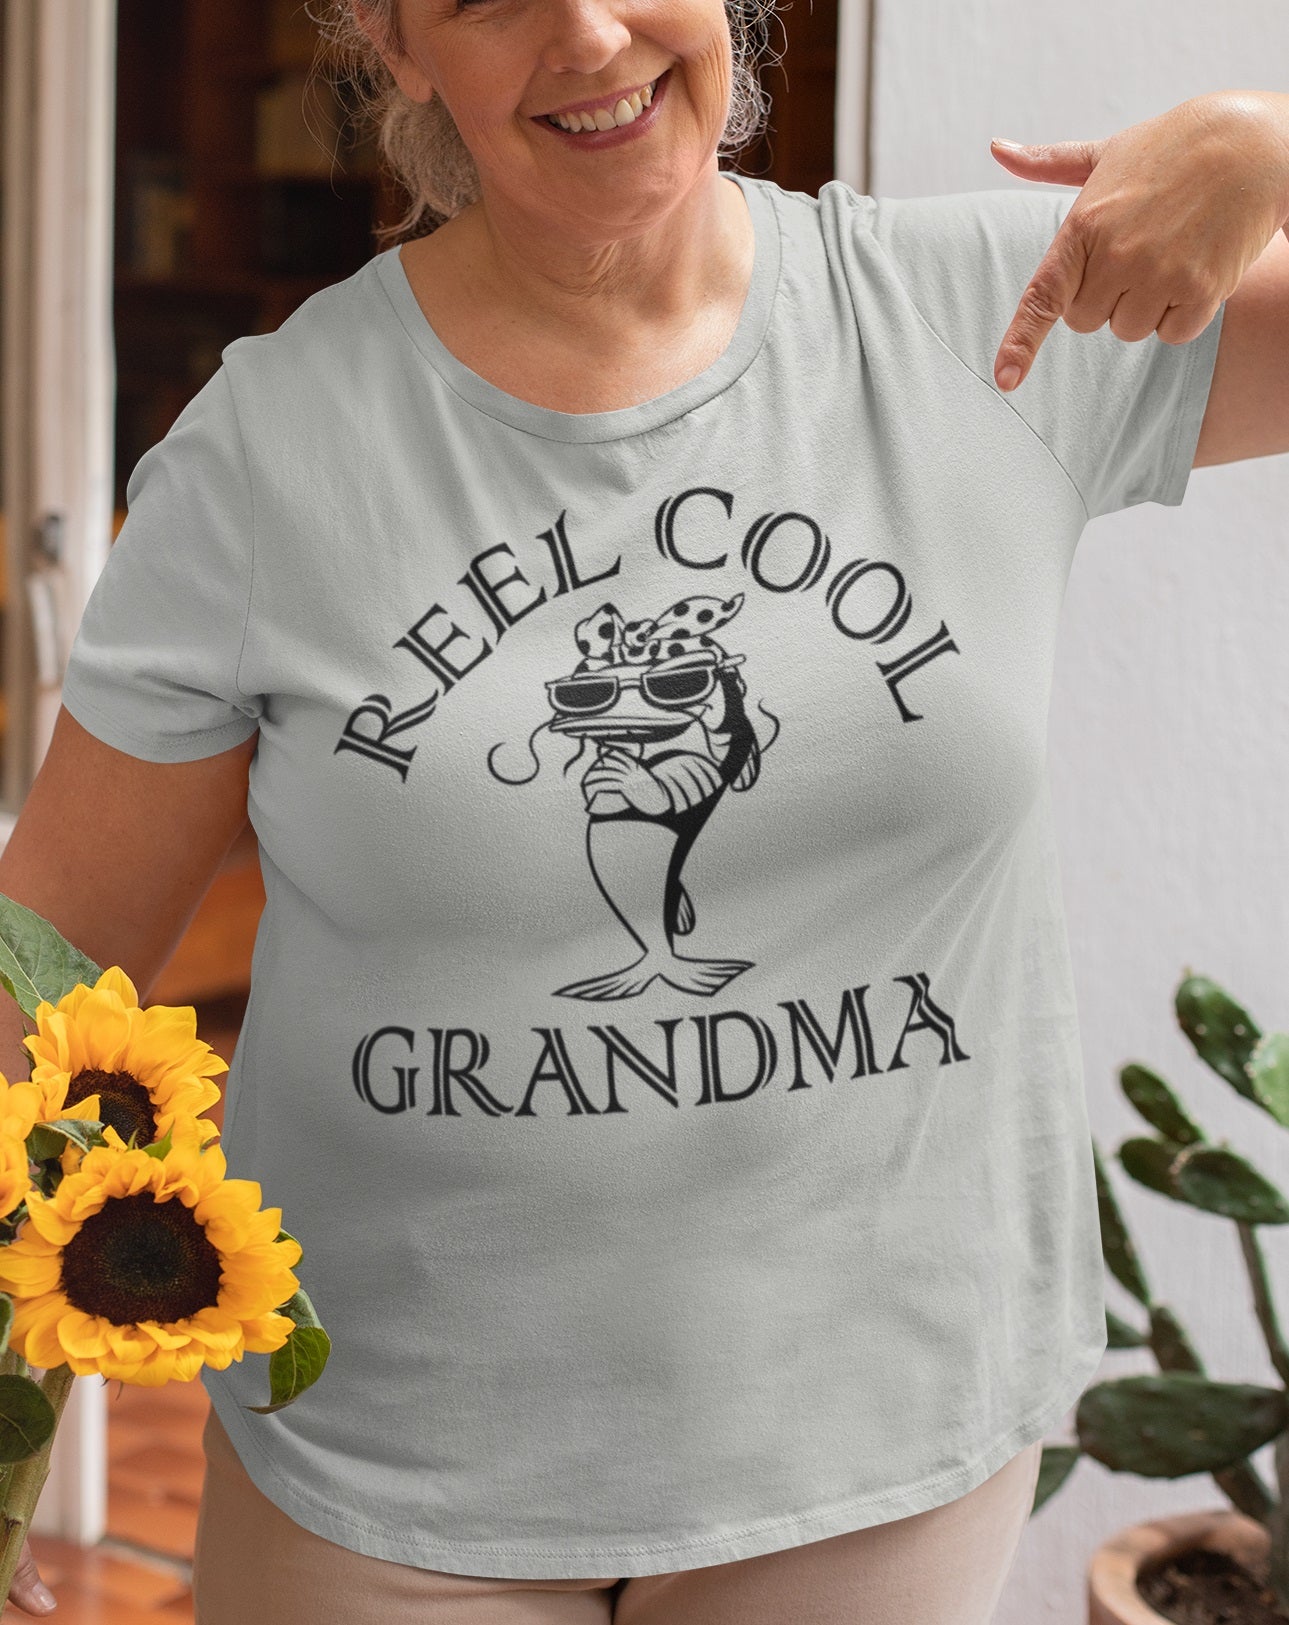 Reel Cool Grandma Fishing Shirt Cute Fishing Gift for Grandmother